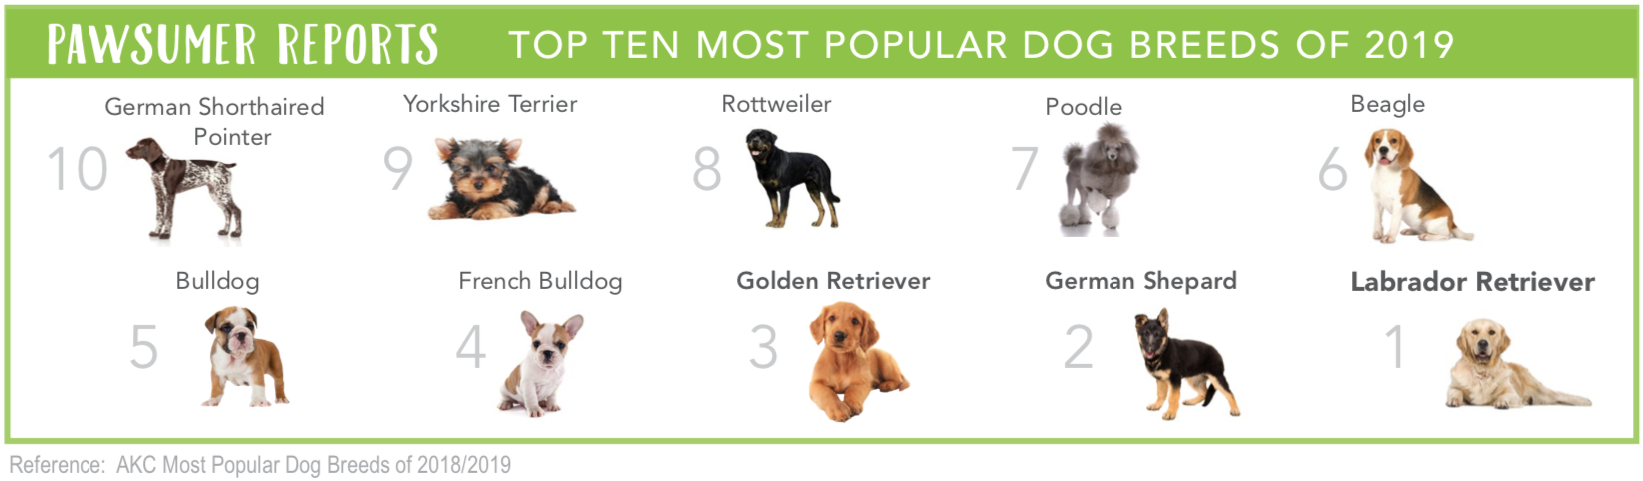 top 10 popular dog breeds